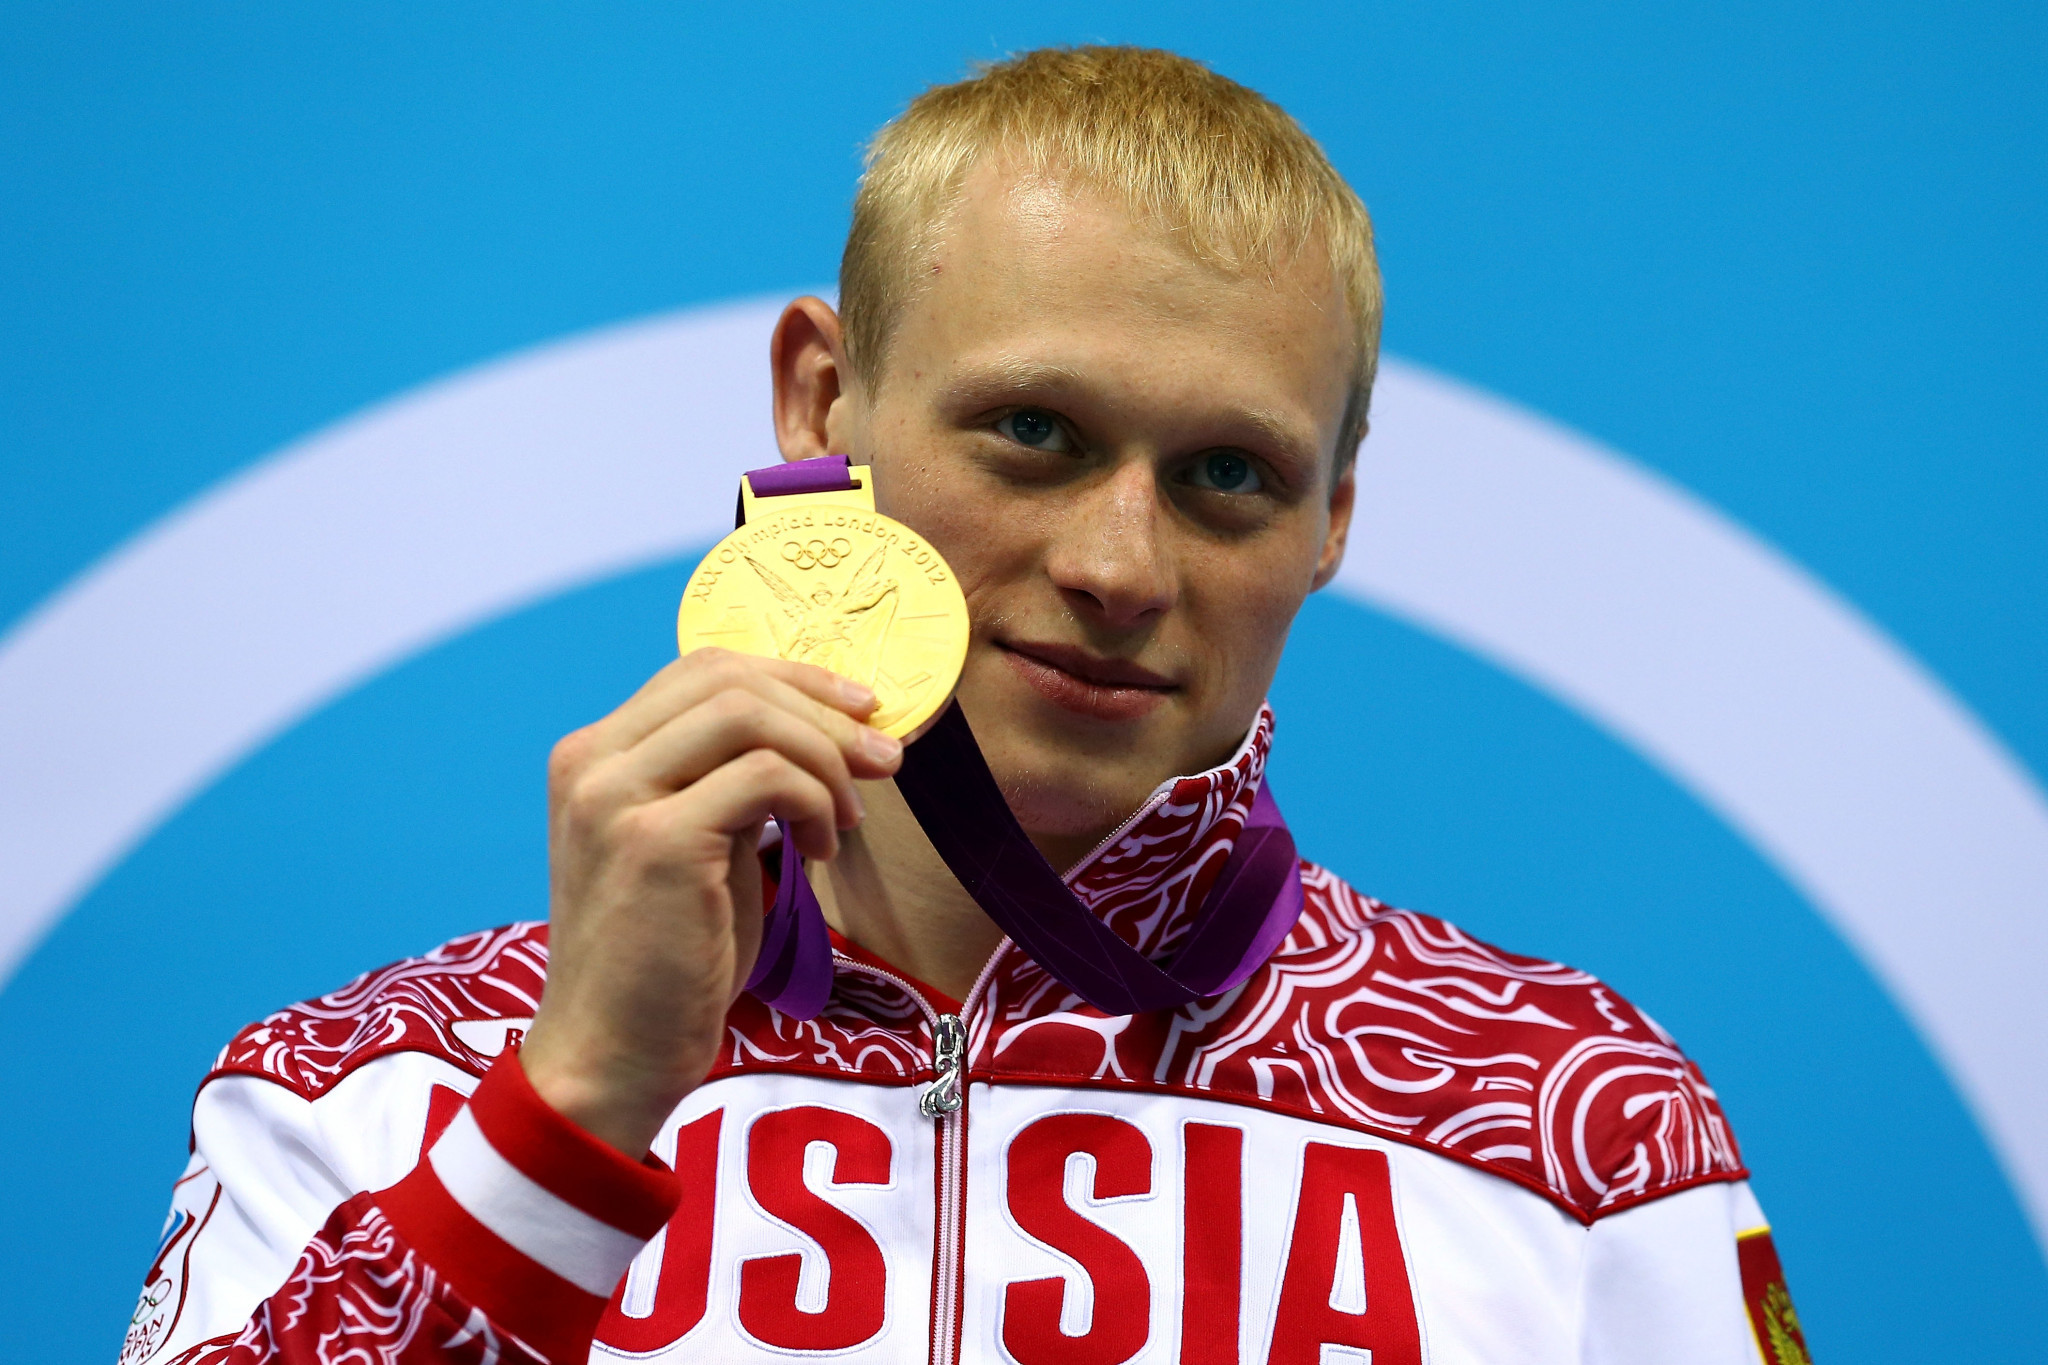 Ilya Zakharov won the 3m springboard gold at London 2012 ©Getty Images